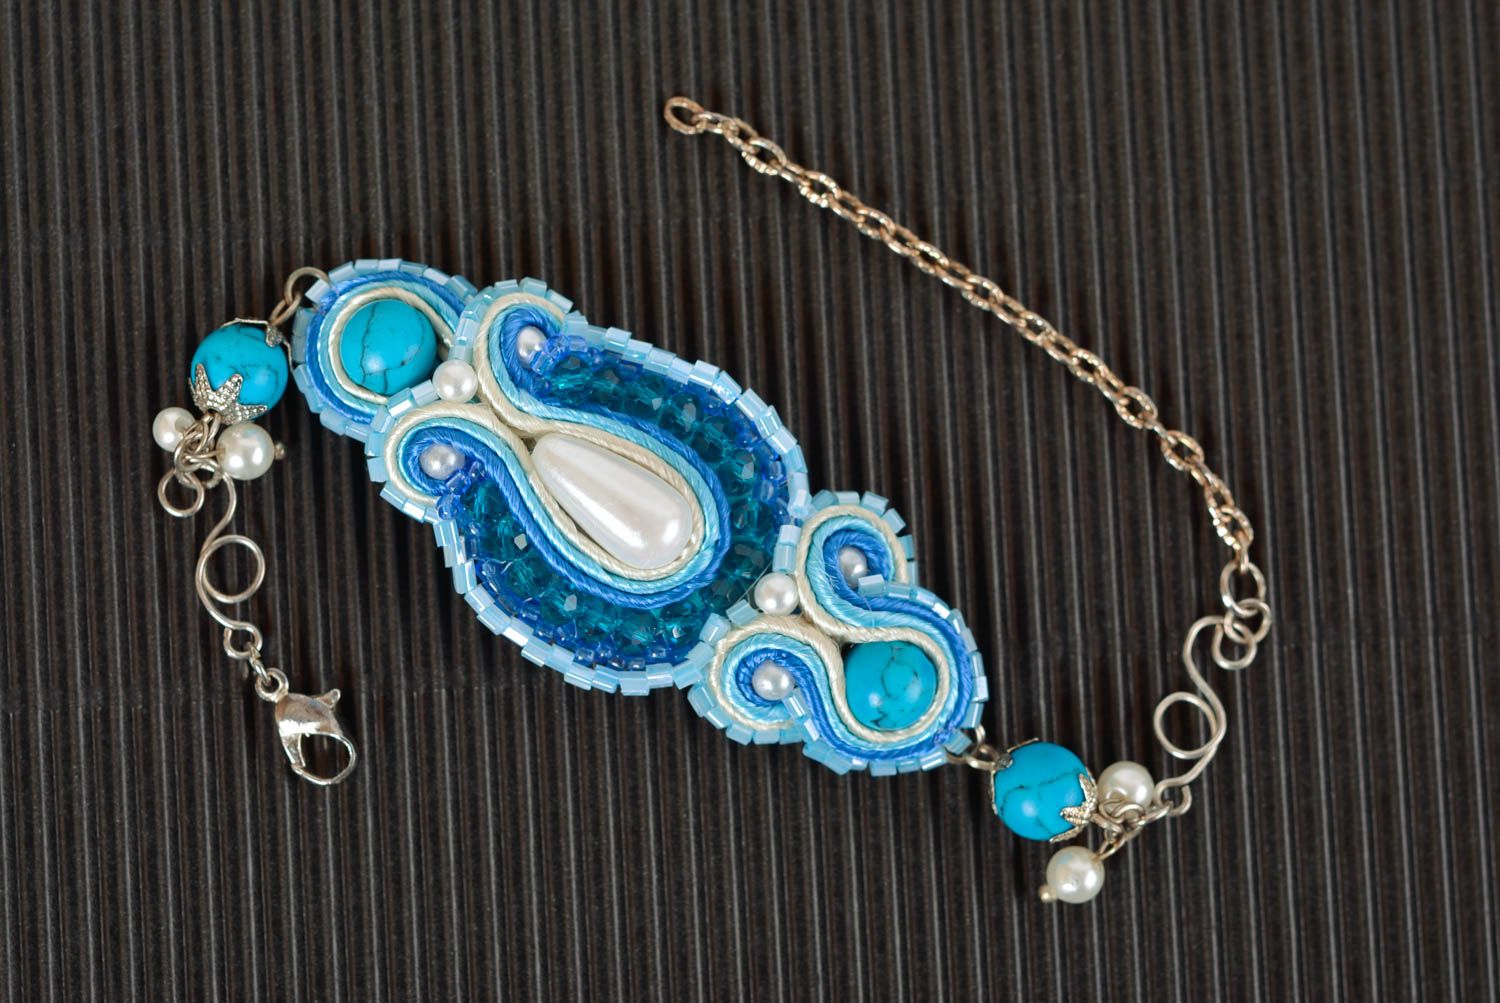 Handmade soutache jewelry soutache brooch and earrings bracelet with stones photo 3